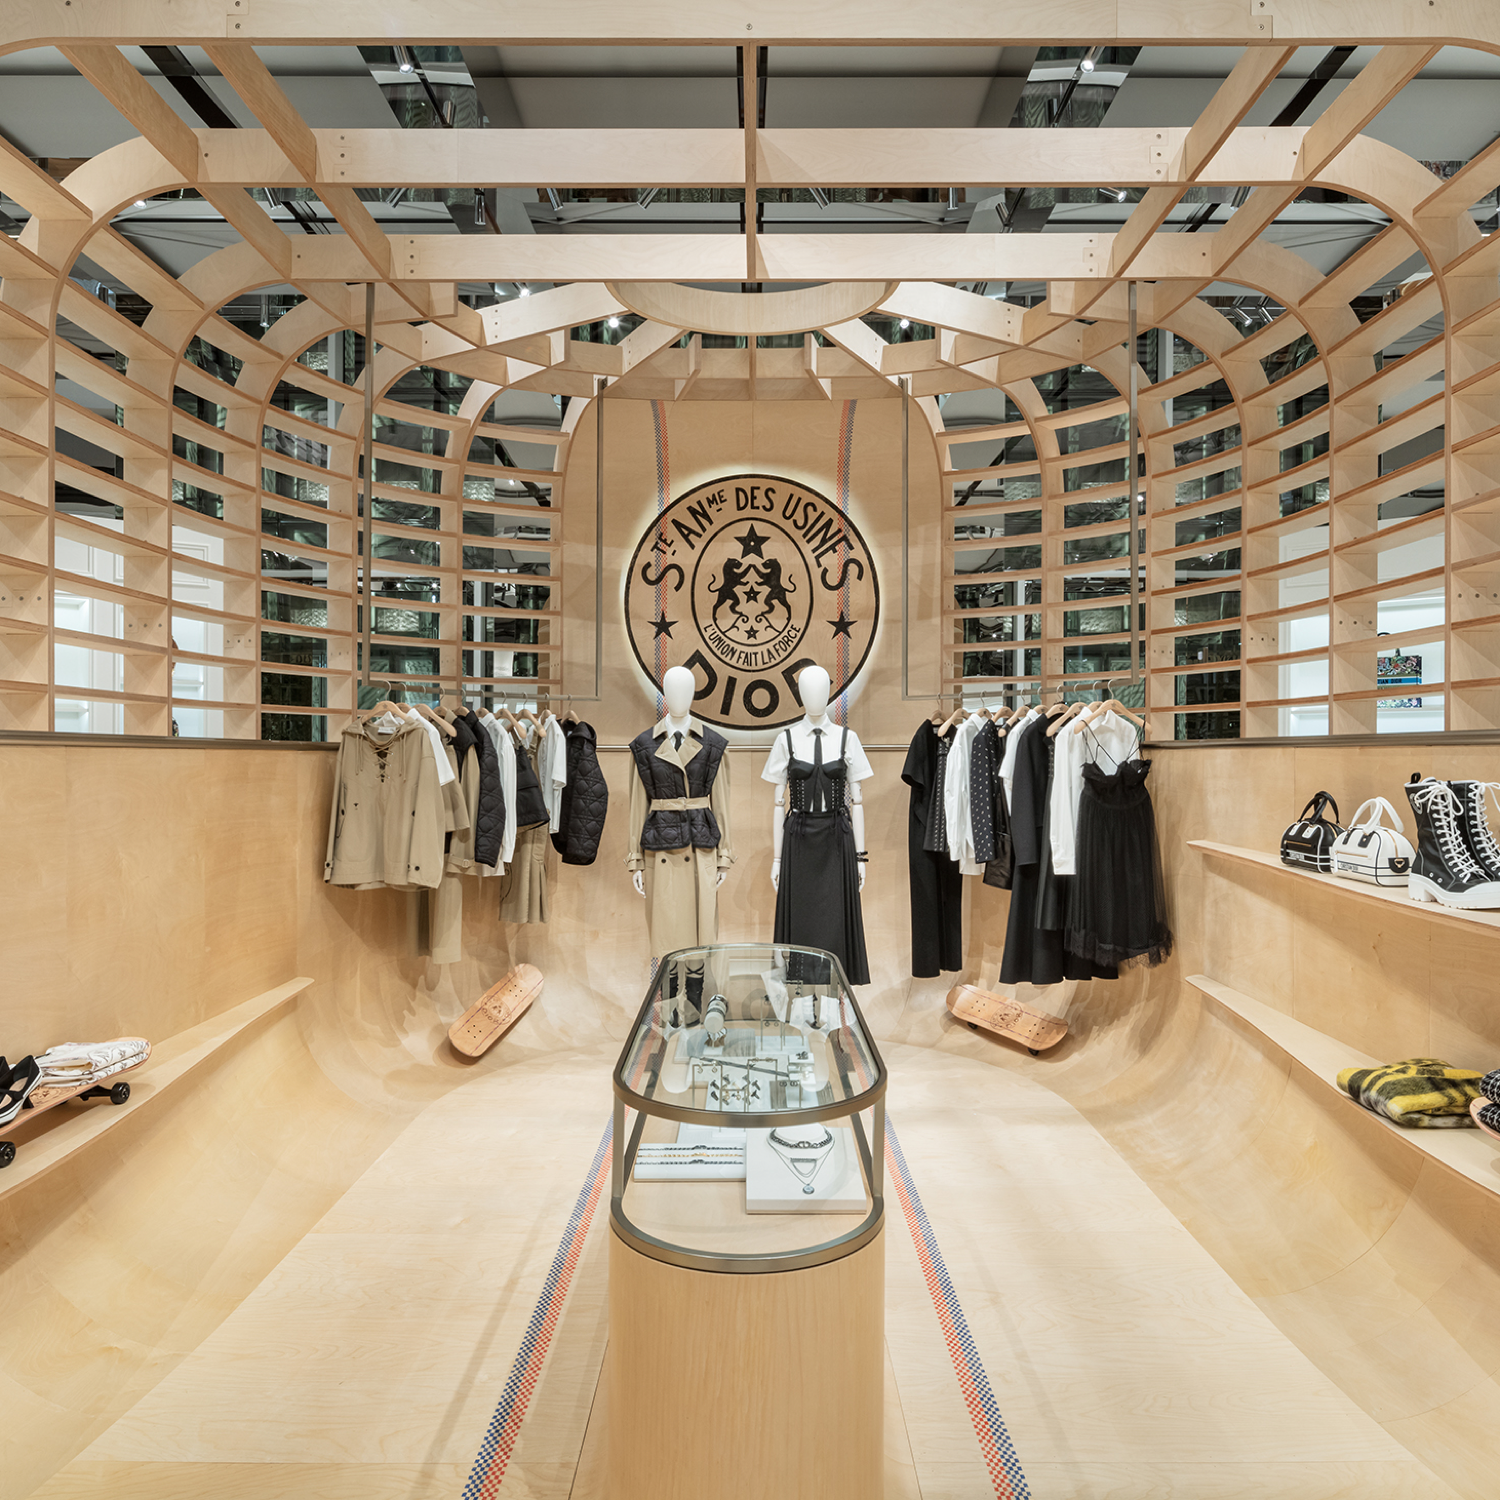 Sail-like panels based on drapery envelope Dior shop in Seoul